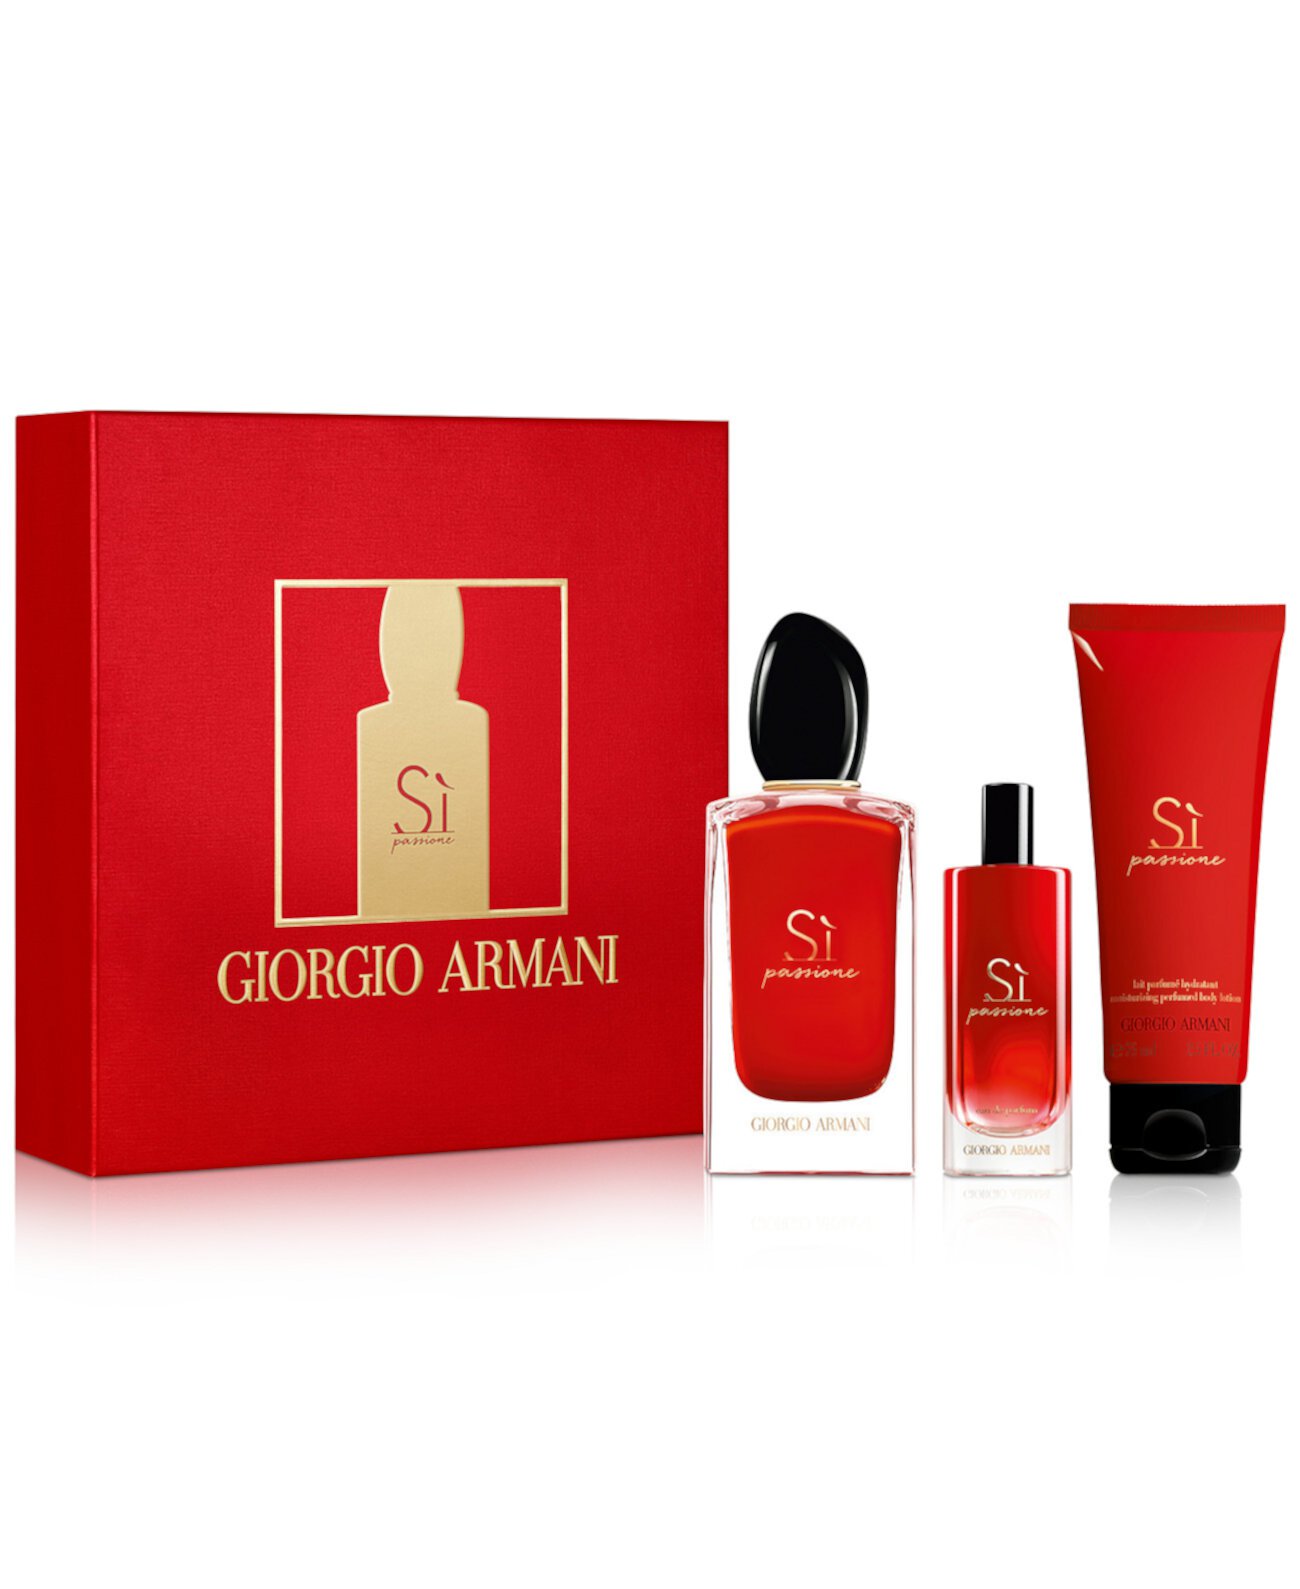 3-шт. Подарочный набор Sì Passione Eau de Parfum Giorgio Armani